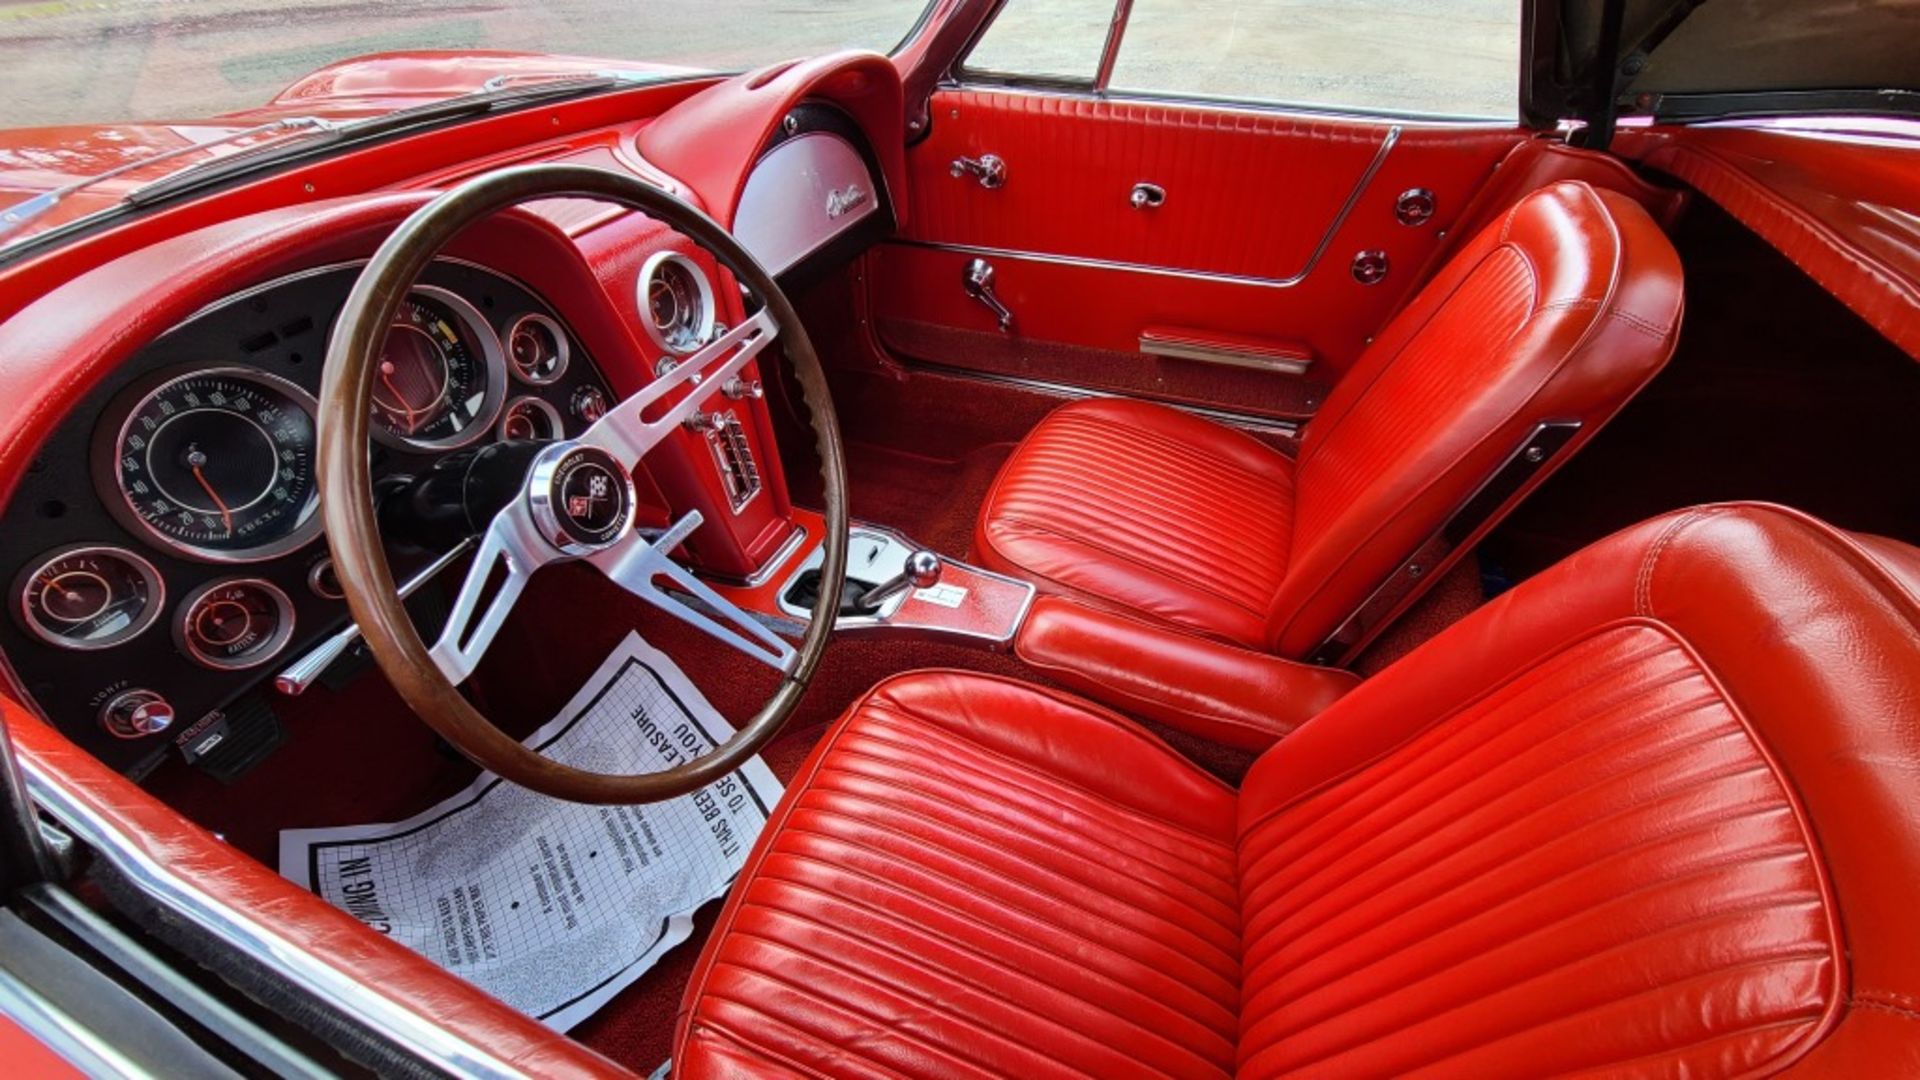 1964 Chevy Corvette Stingray - Image 11 of 13